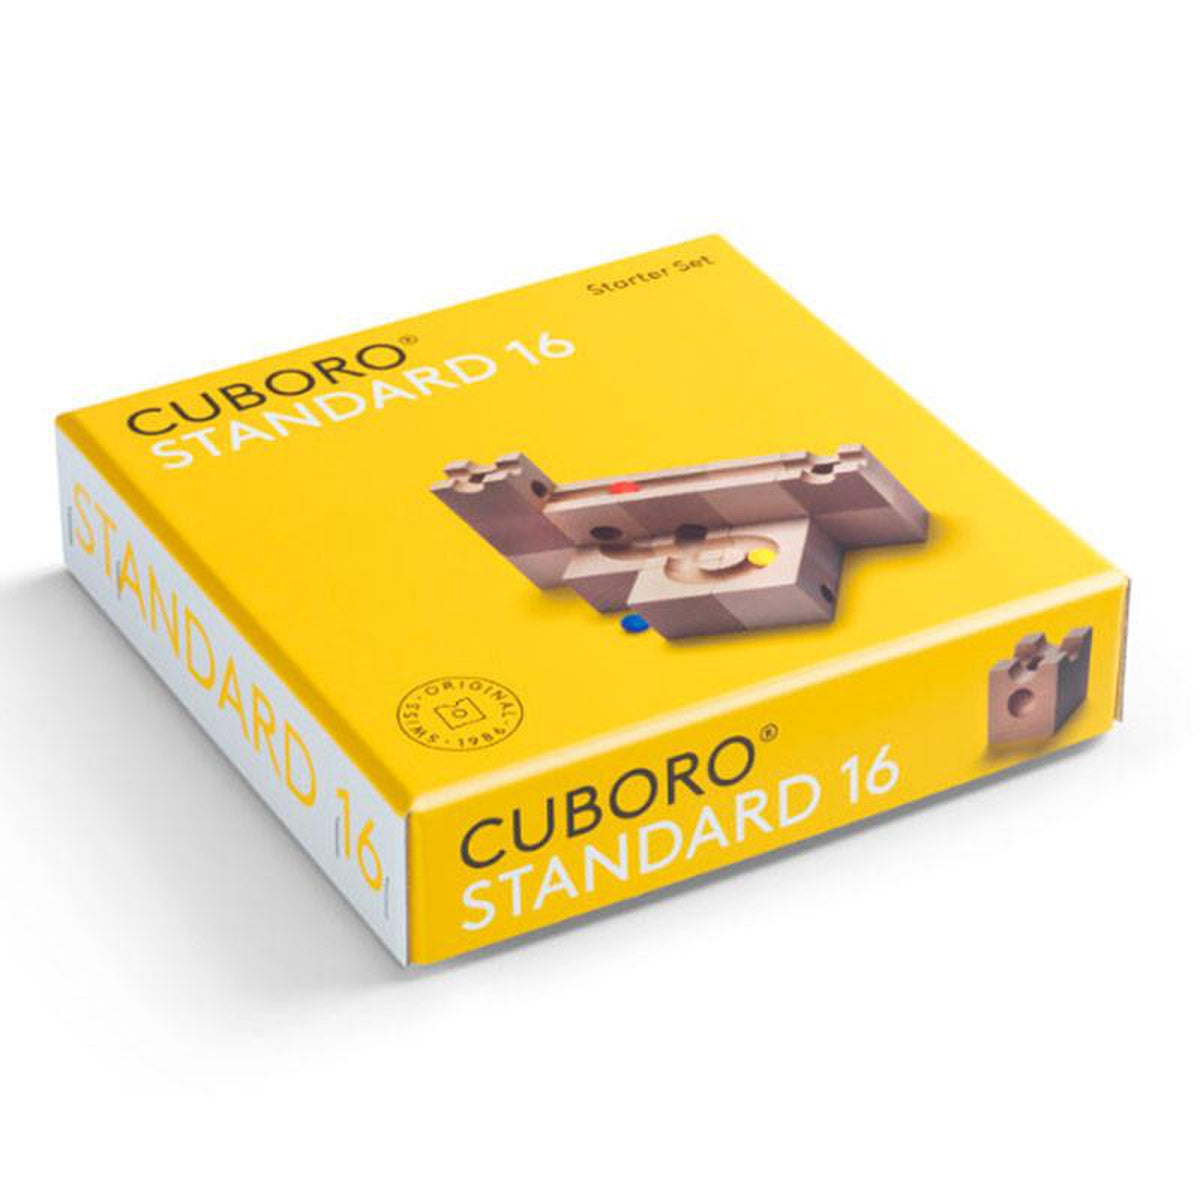 Cuboro standard 16 small starter set